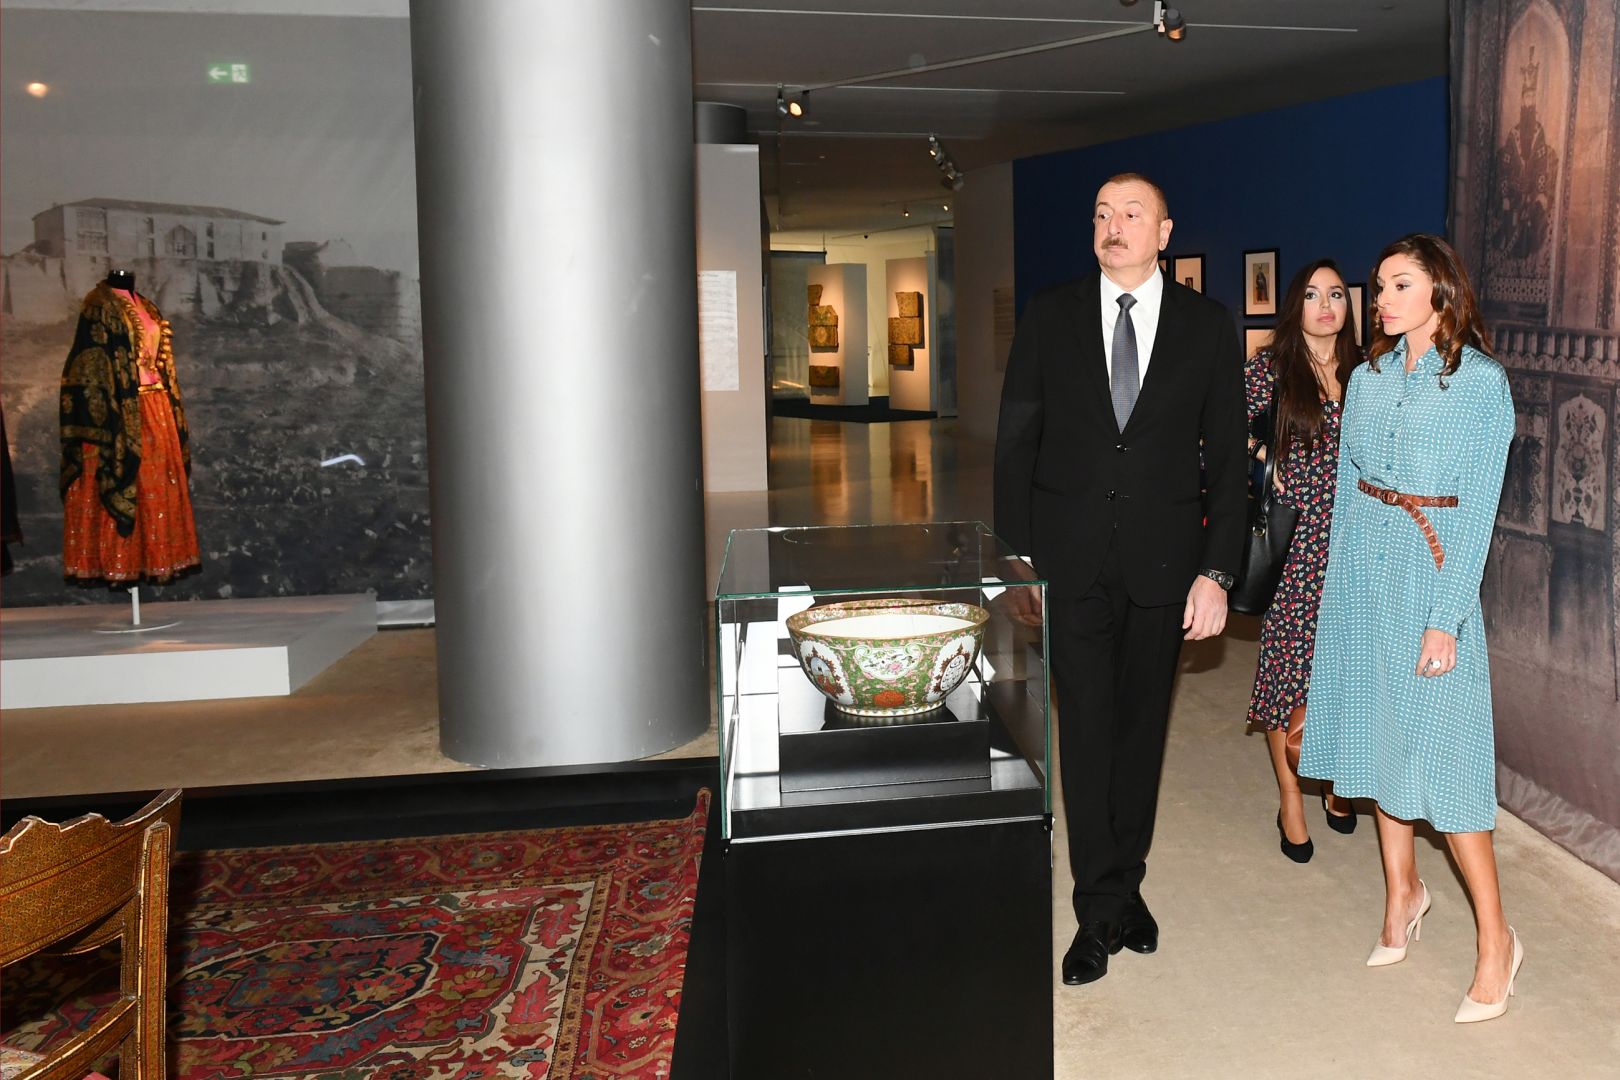 President Ilham Aliyev presents "Sharaf" Order to People’s Artist Alibaba Mammadov (PHOTO)